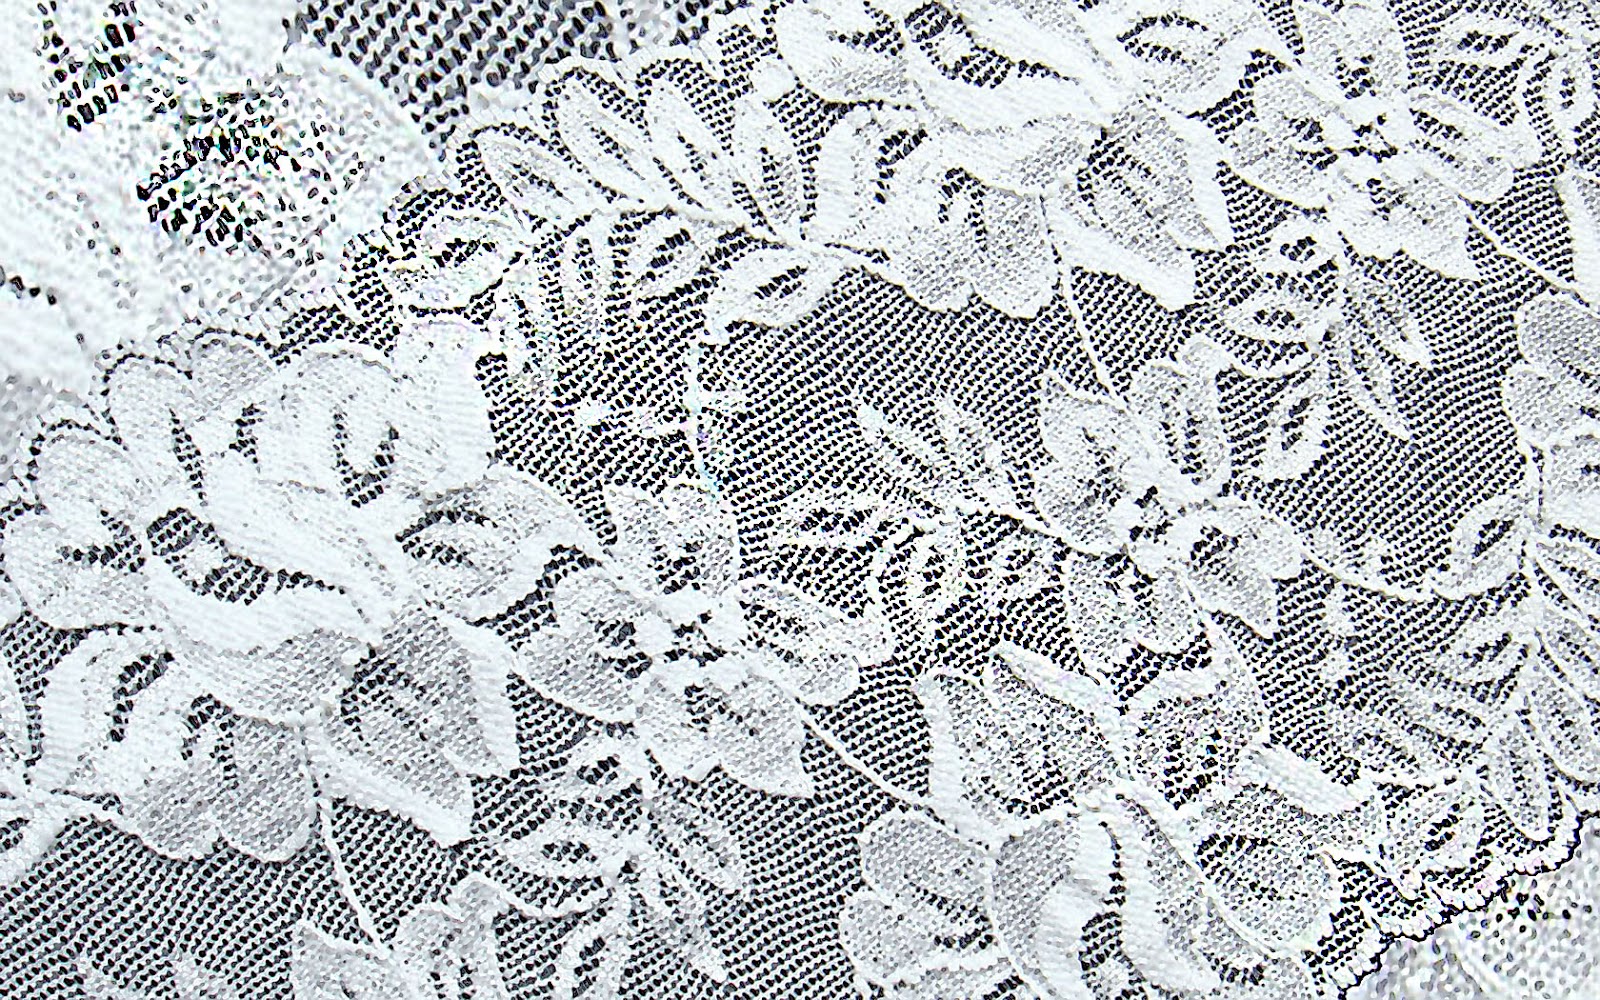 tumblr themes vintage lace photography Tumblr Free   11 Backgrounds ibjennyjenny Lace